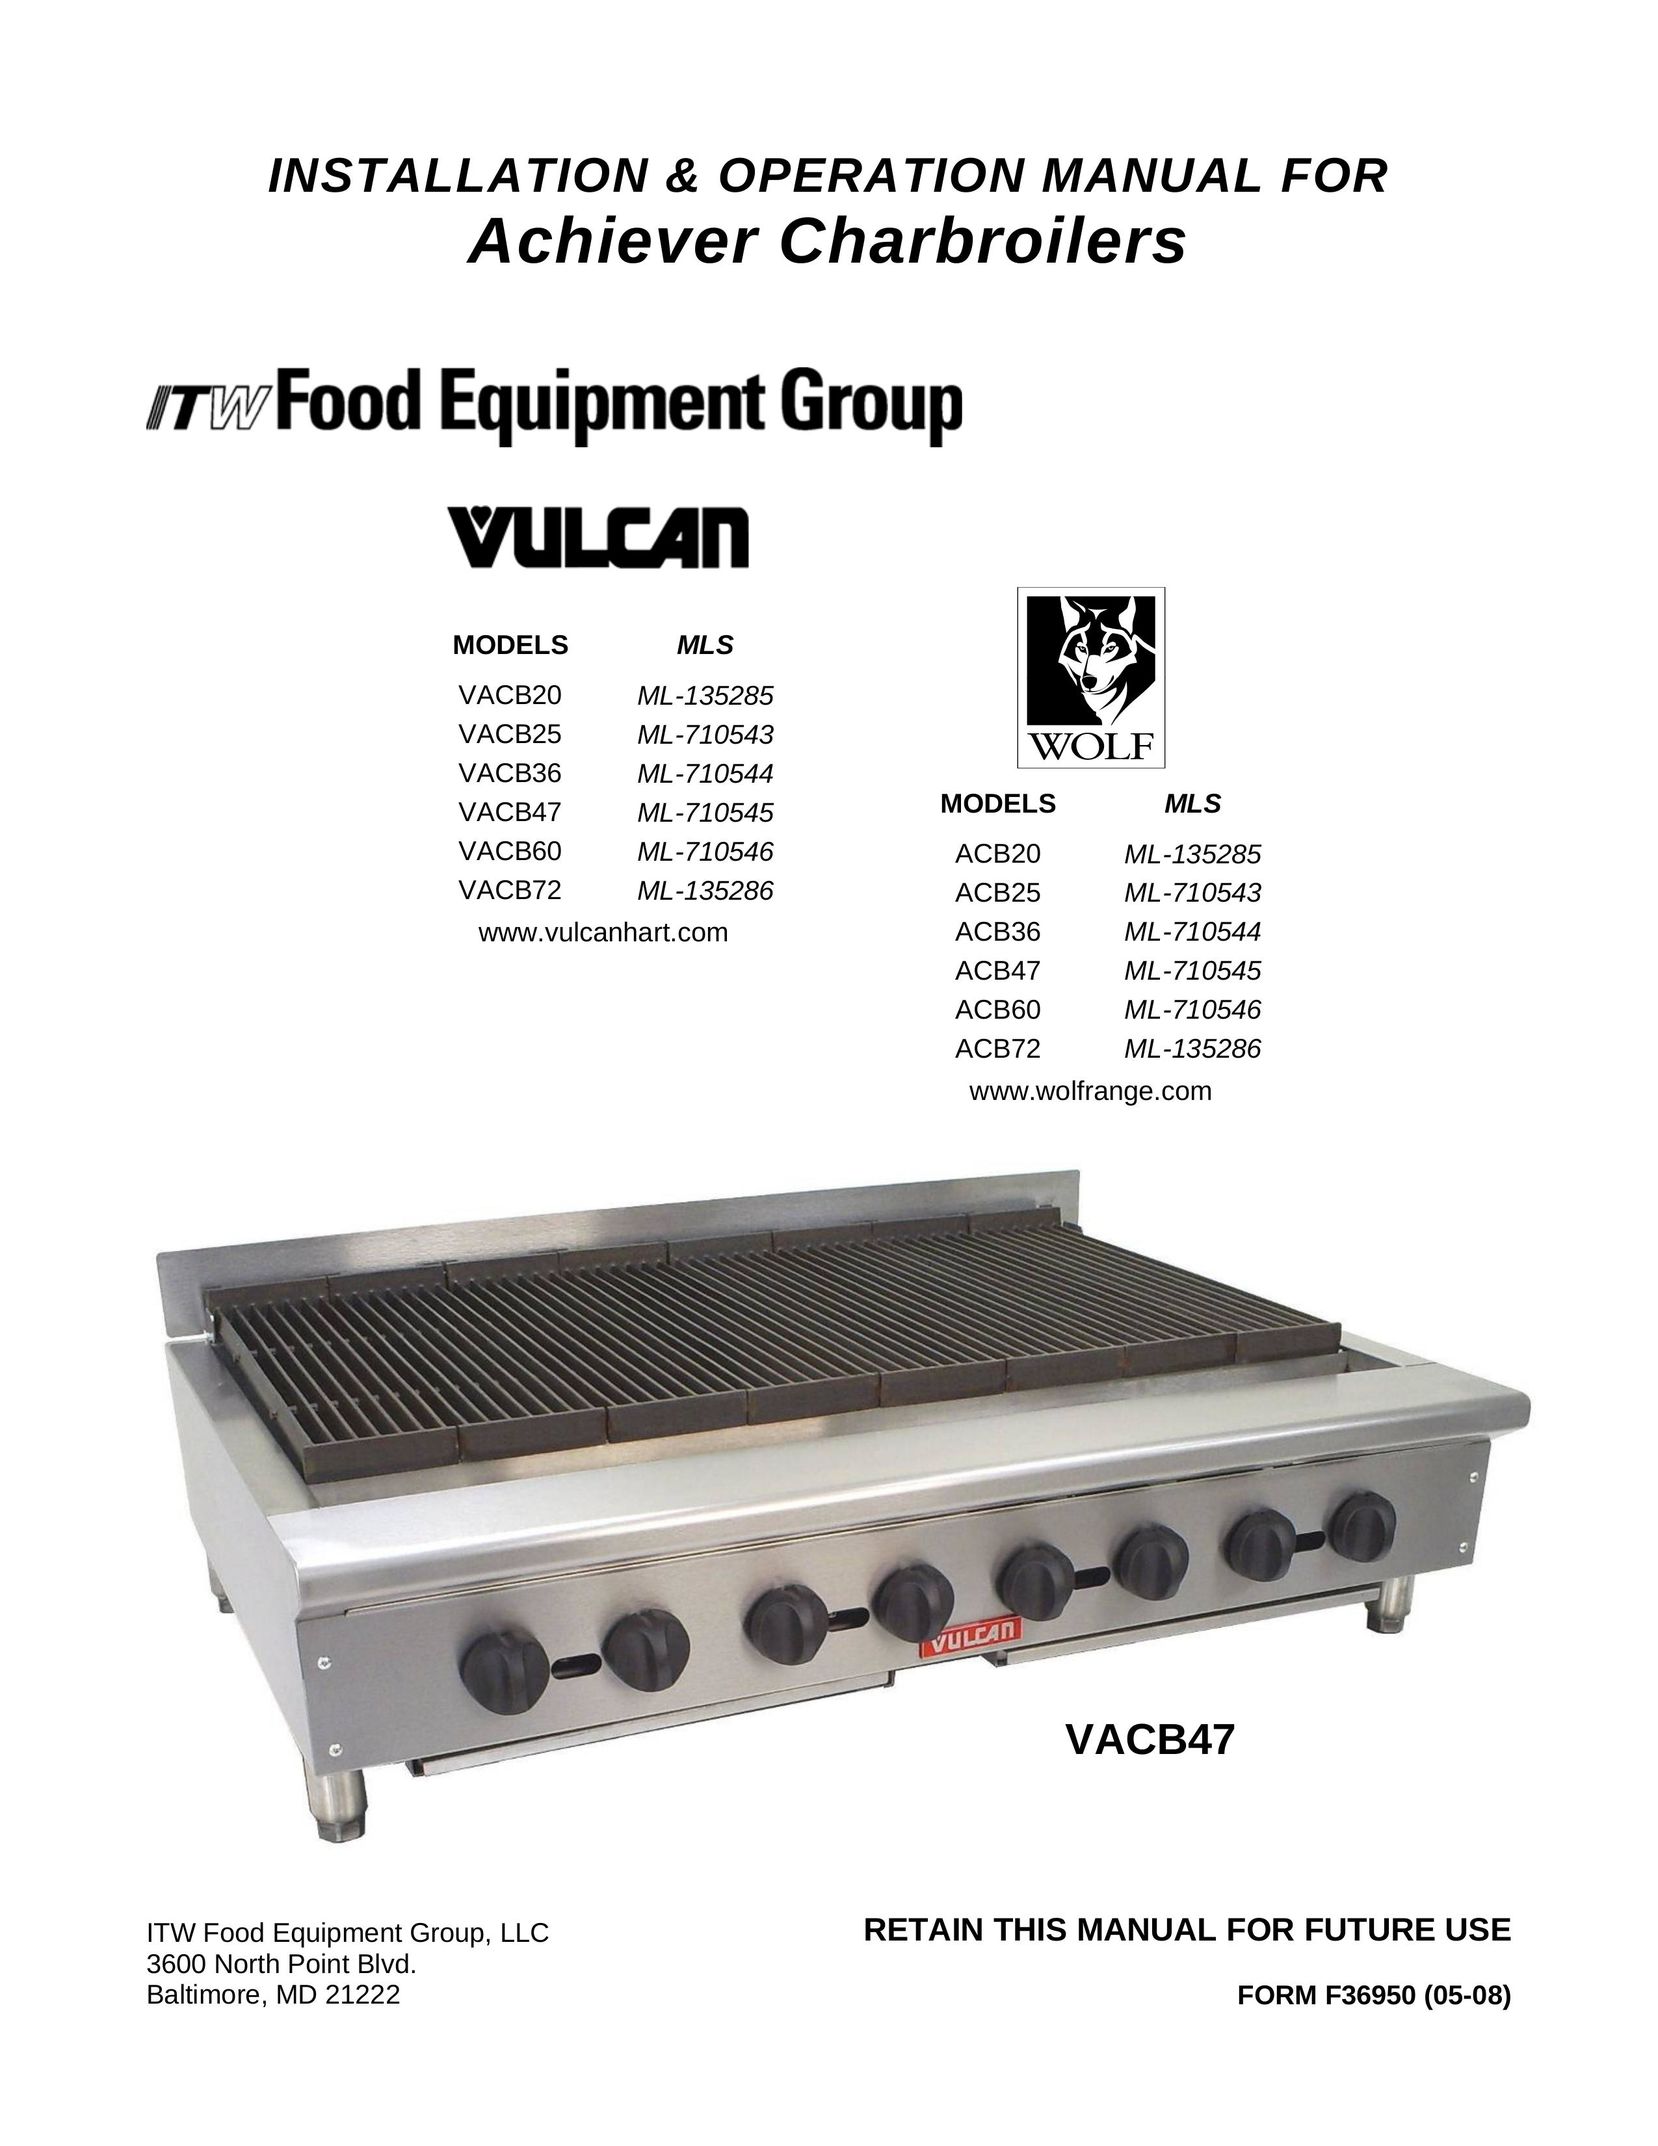 Vulcan-Hart ACB36 ML-710544 Oven User Manual